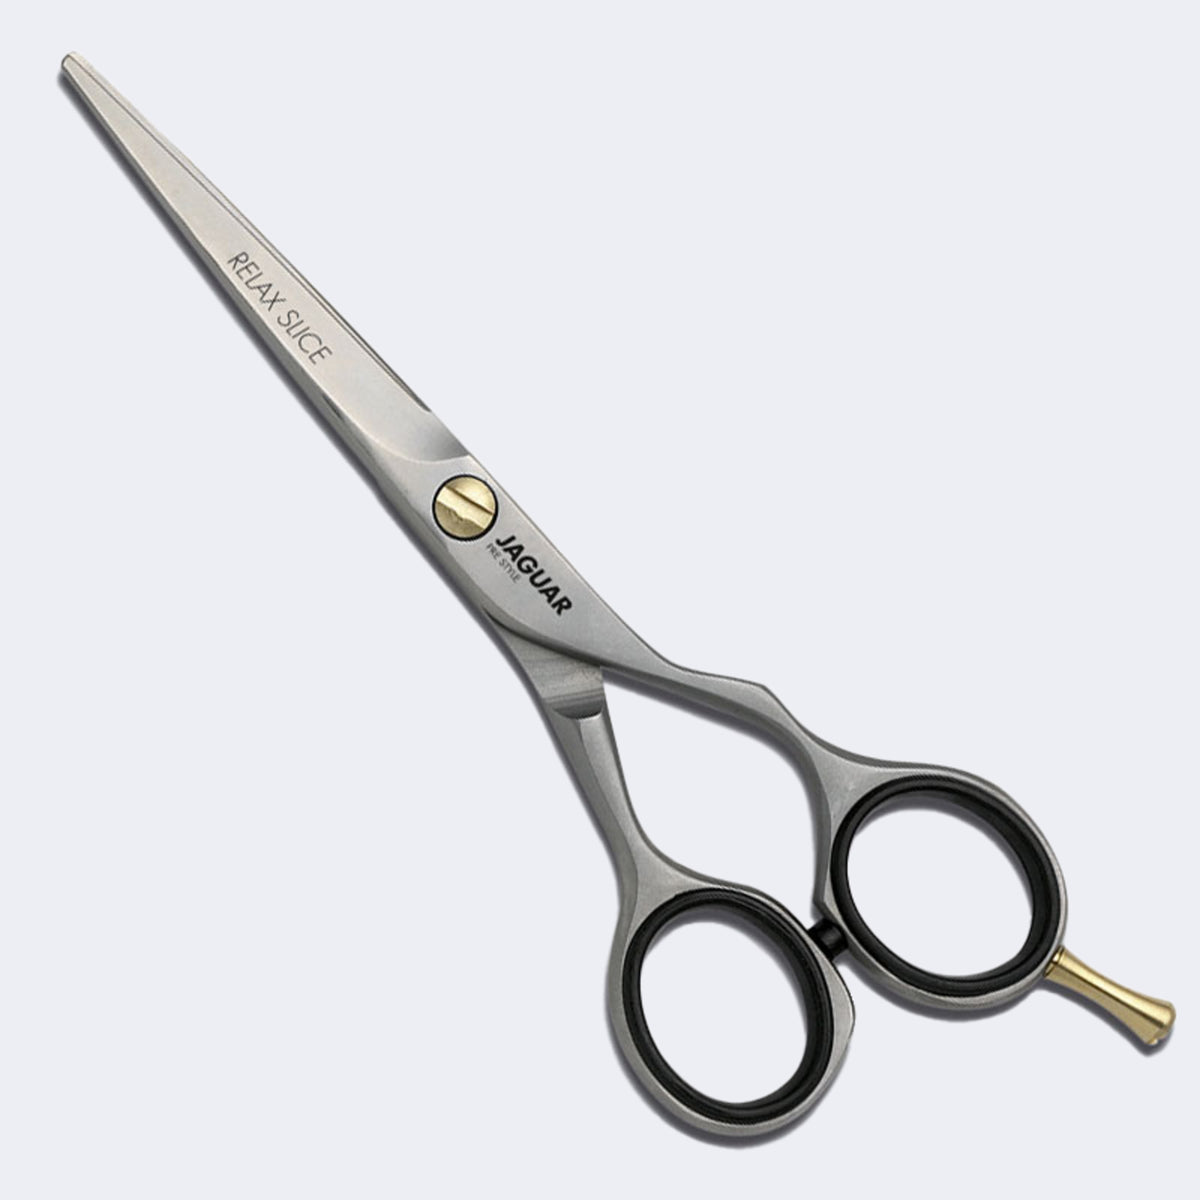 6" Relax Slice scissors, offset handles